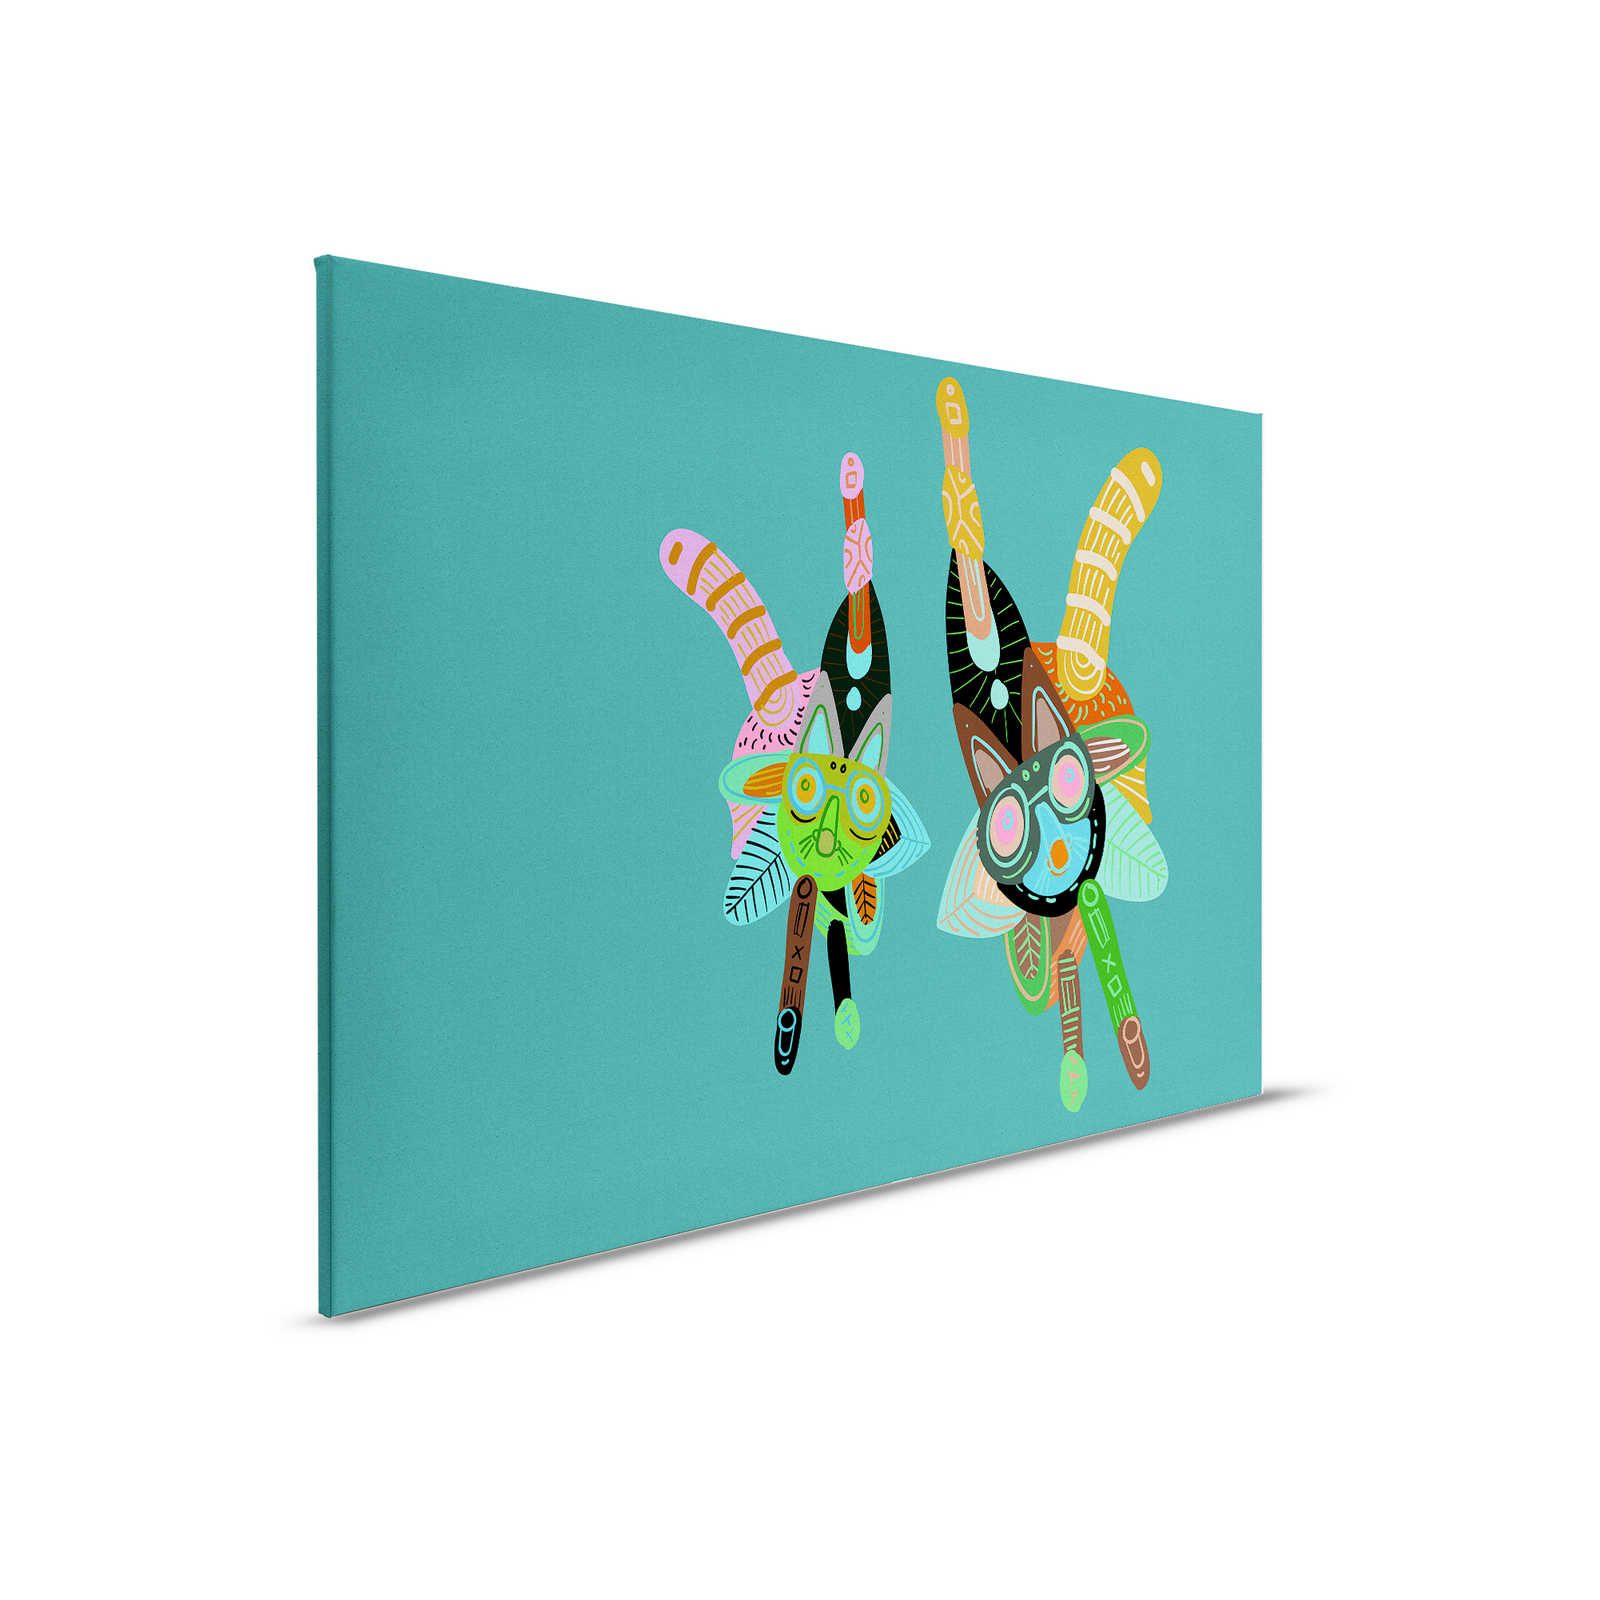         Looney Land 3 - Canvas painting children's room colourful comic design - 0.90 m x 0.60 m
    